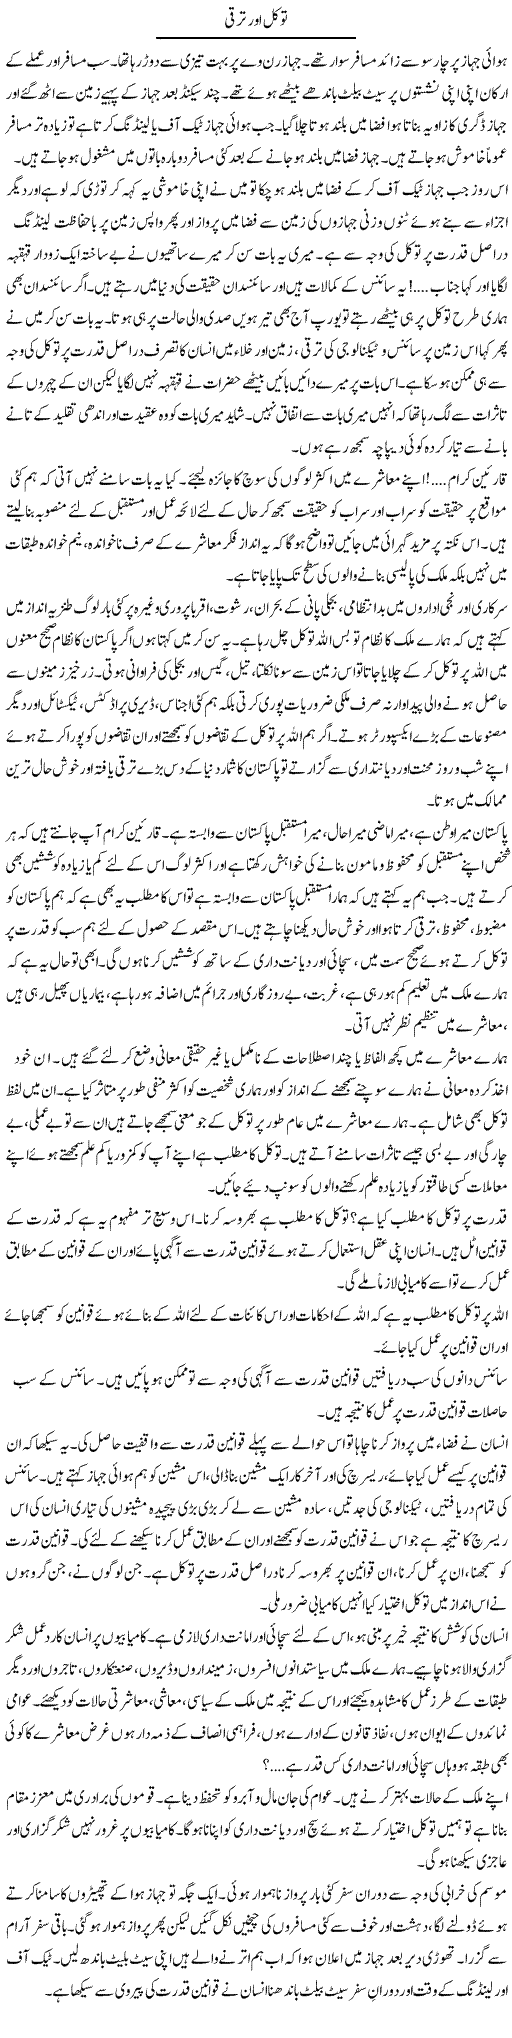 Tawakal Aor Taraqqi | Dr. Waqar Yousuf Azeemi | Daily Urdu Columns